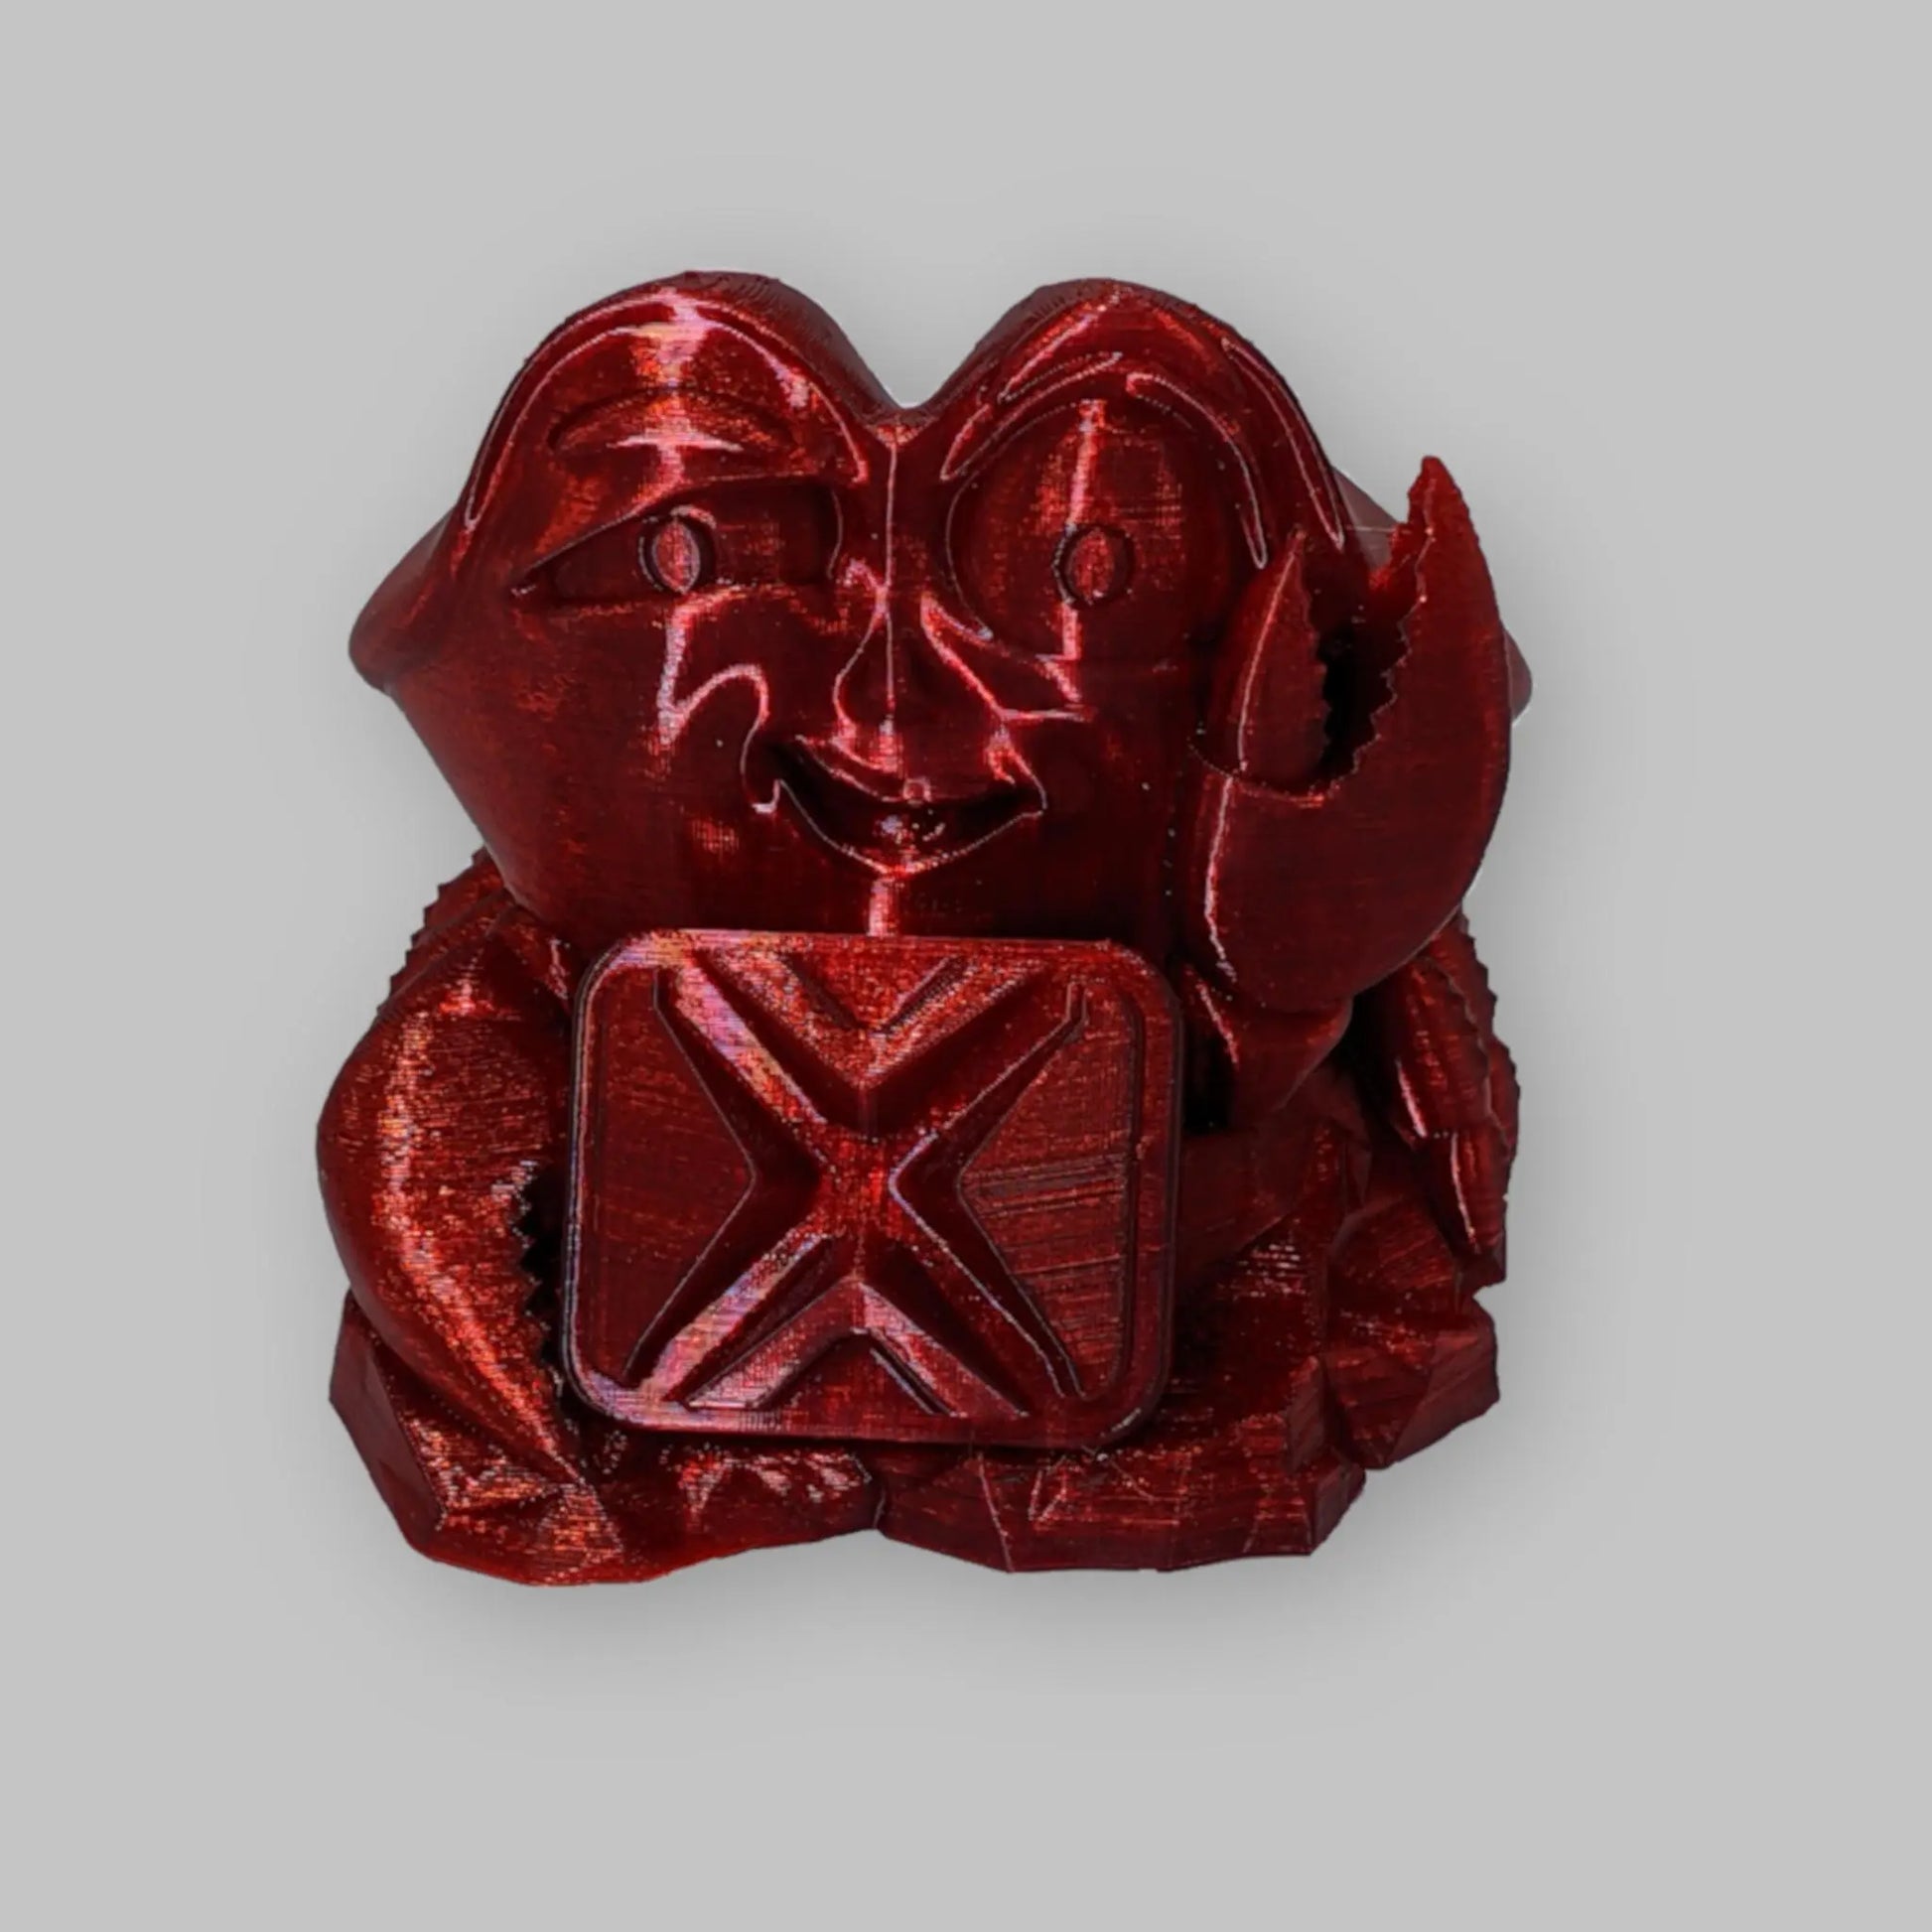 Bobine PLA rouge Bloody red 1.75 mm 1 kg - Spectrum — Filimprimante3D